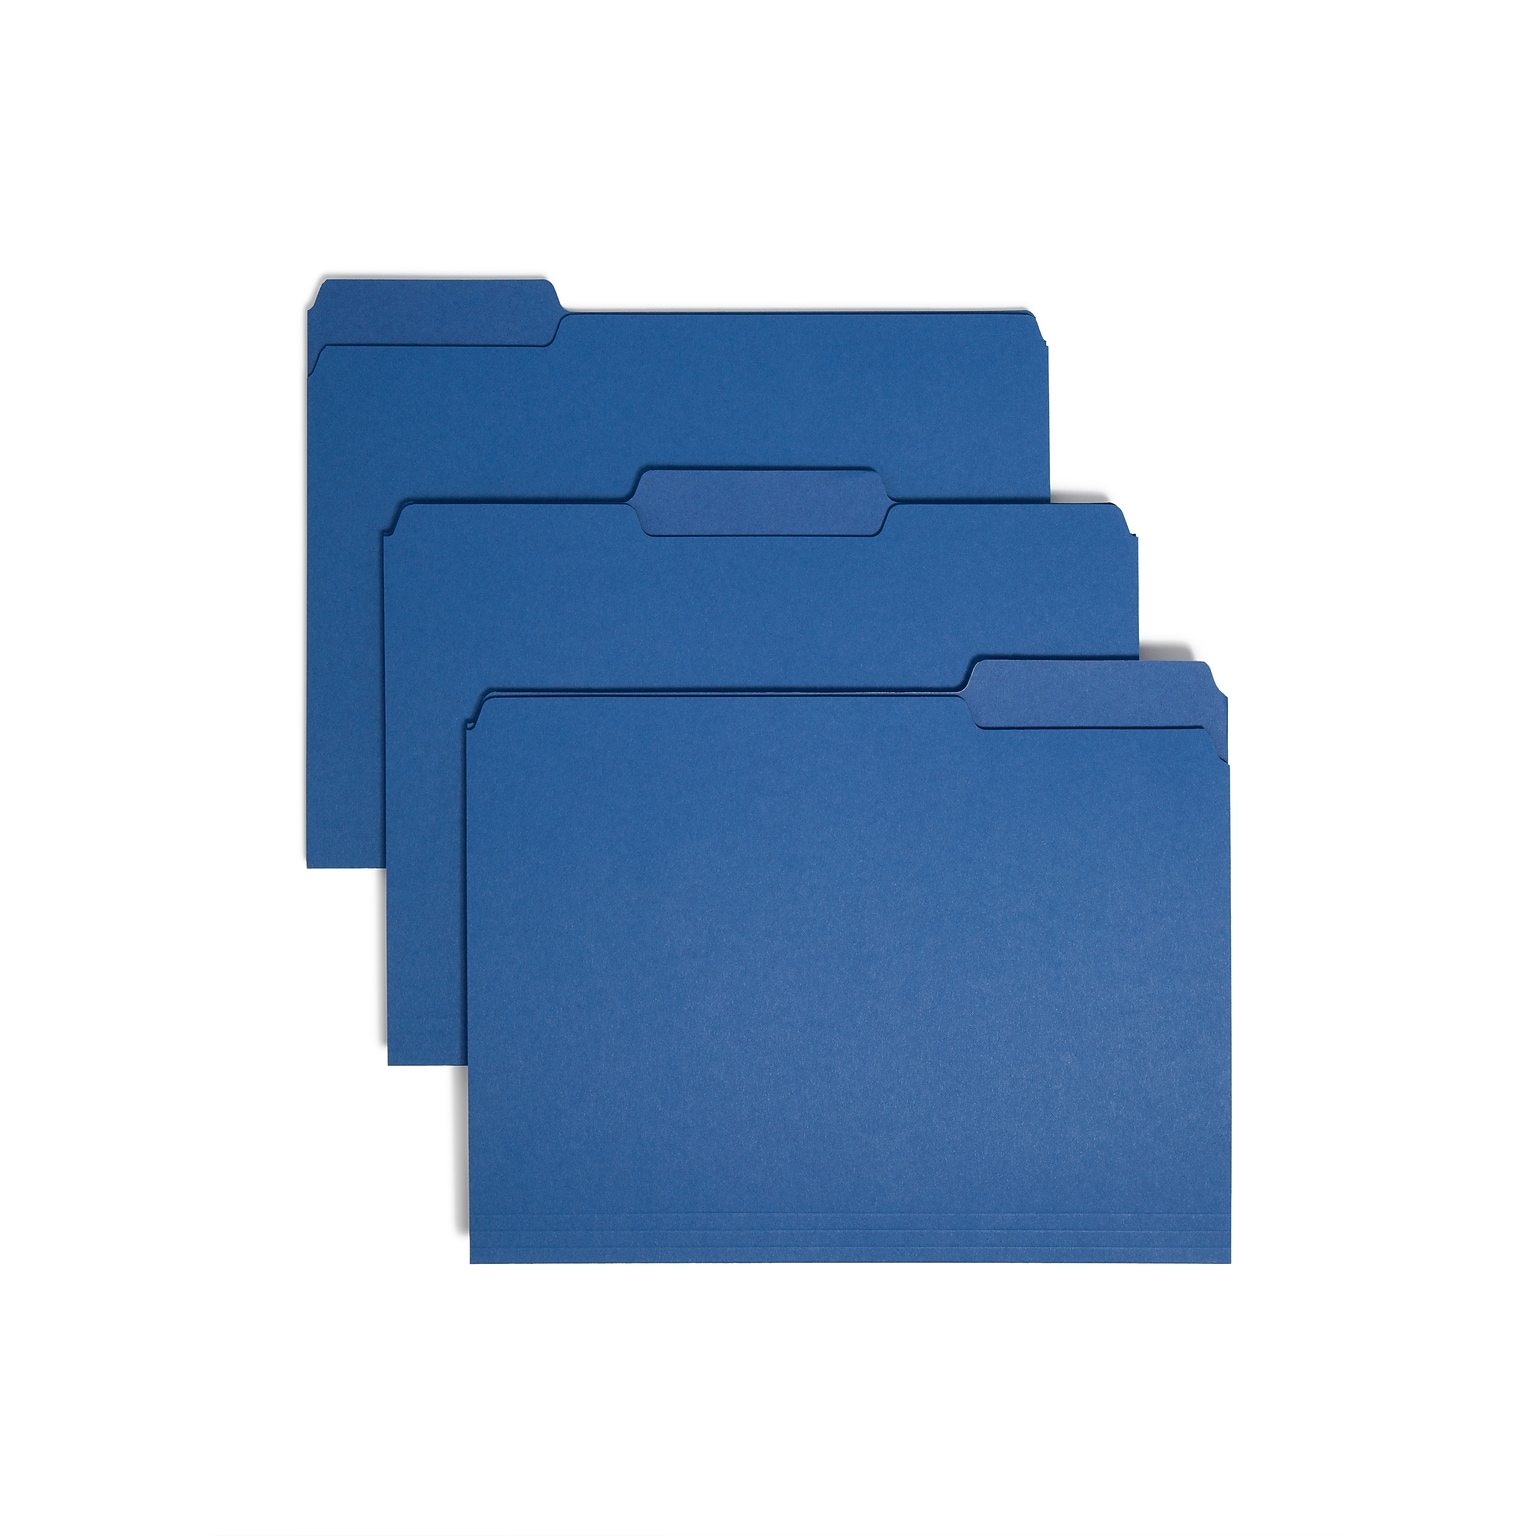 Smead File Folder, 3 Tab, Letter Size, Navy, 100/Box (10279)